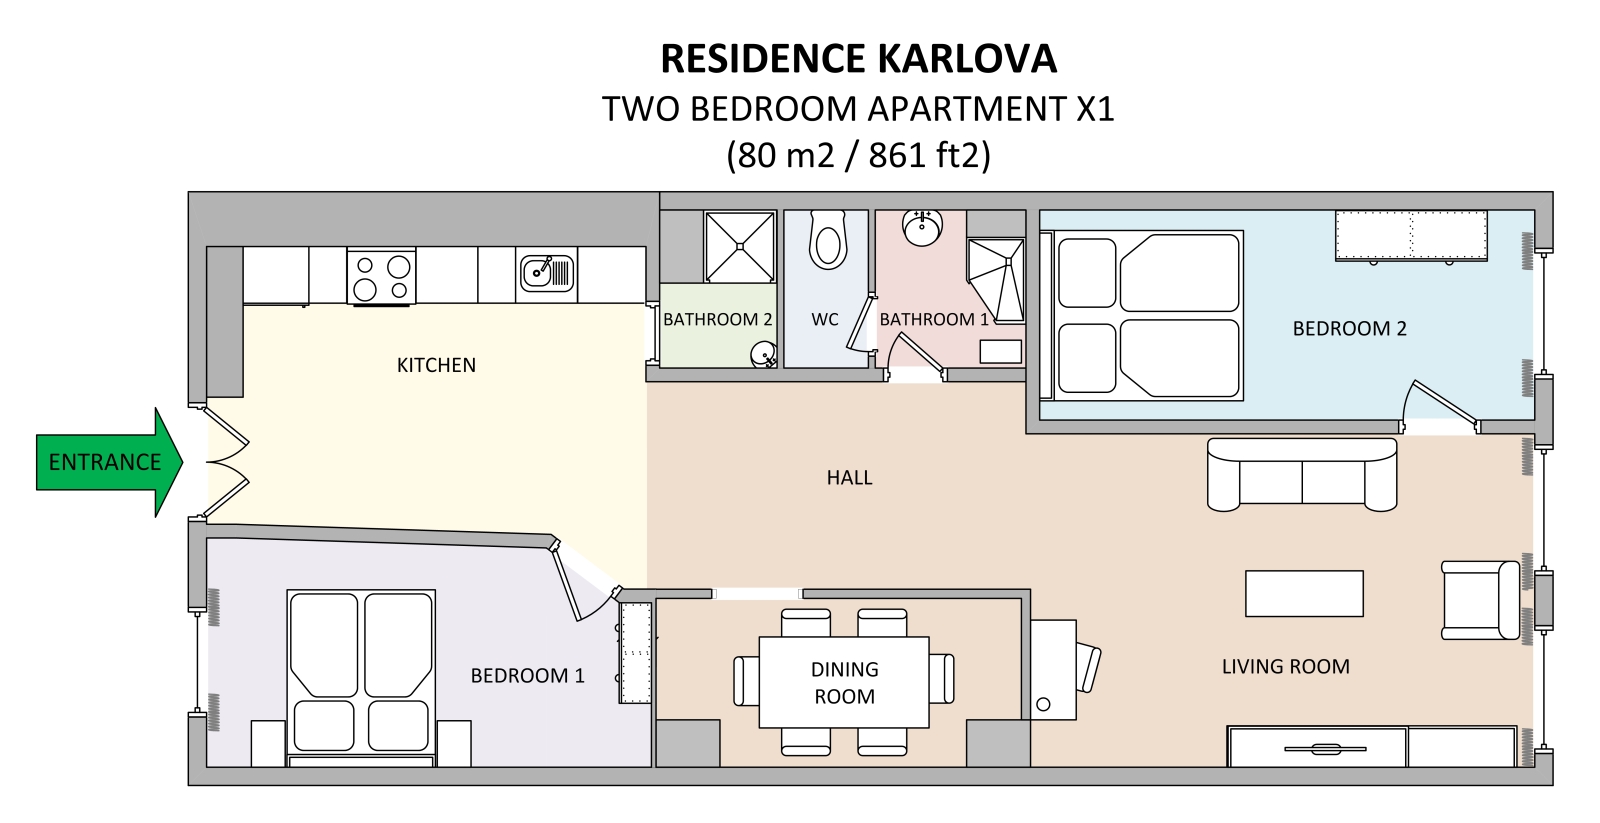 Floorplan of apartment x1 in Residence Karlova in Prague